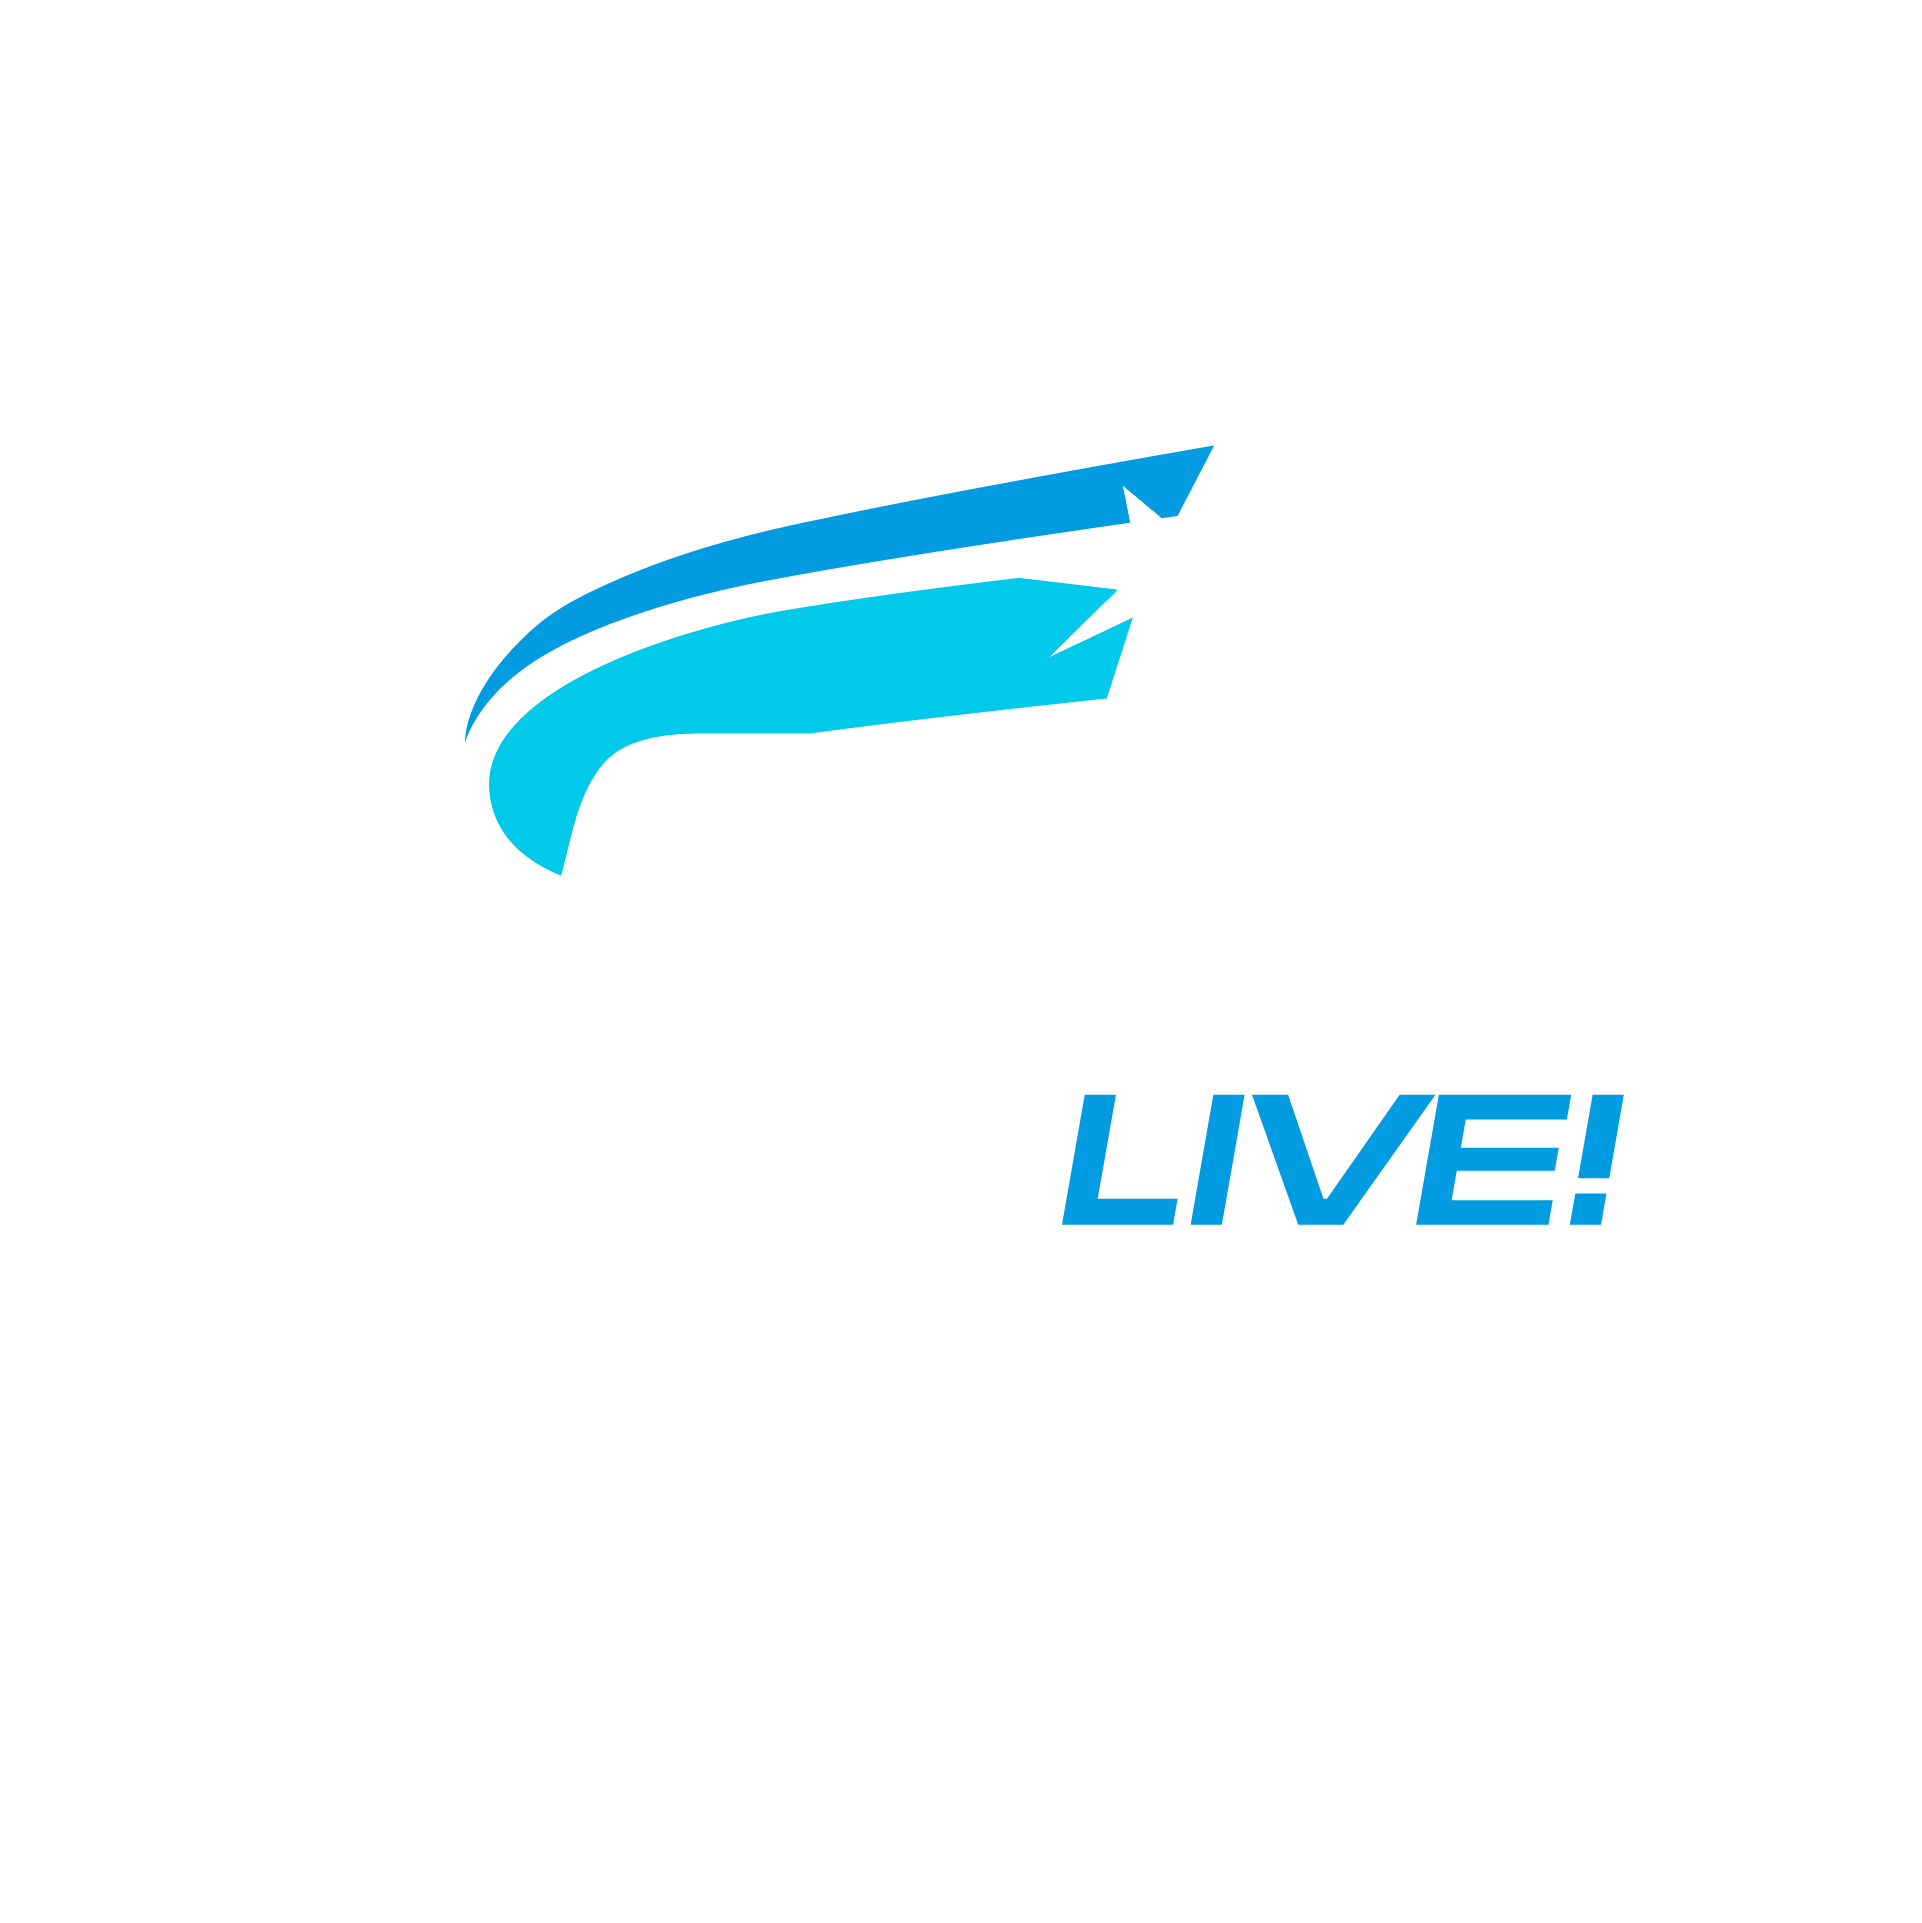 cla_logo_white_on_bluebig